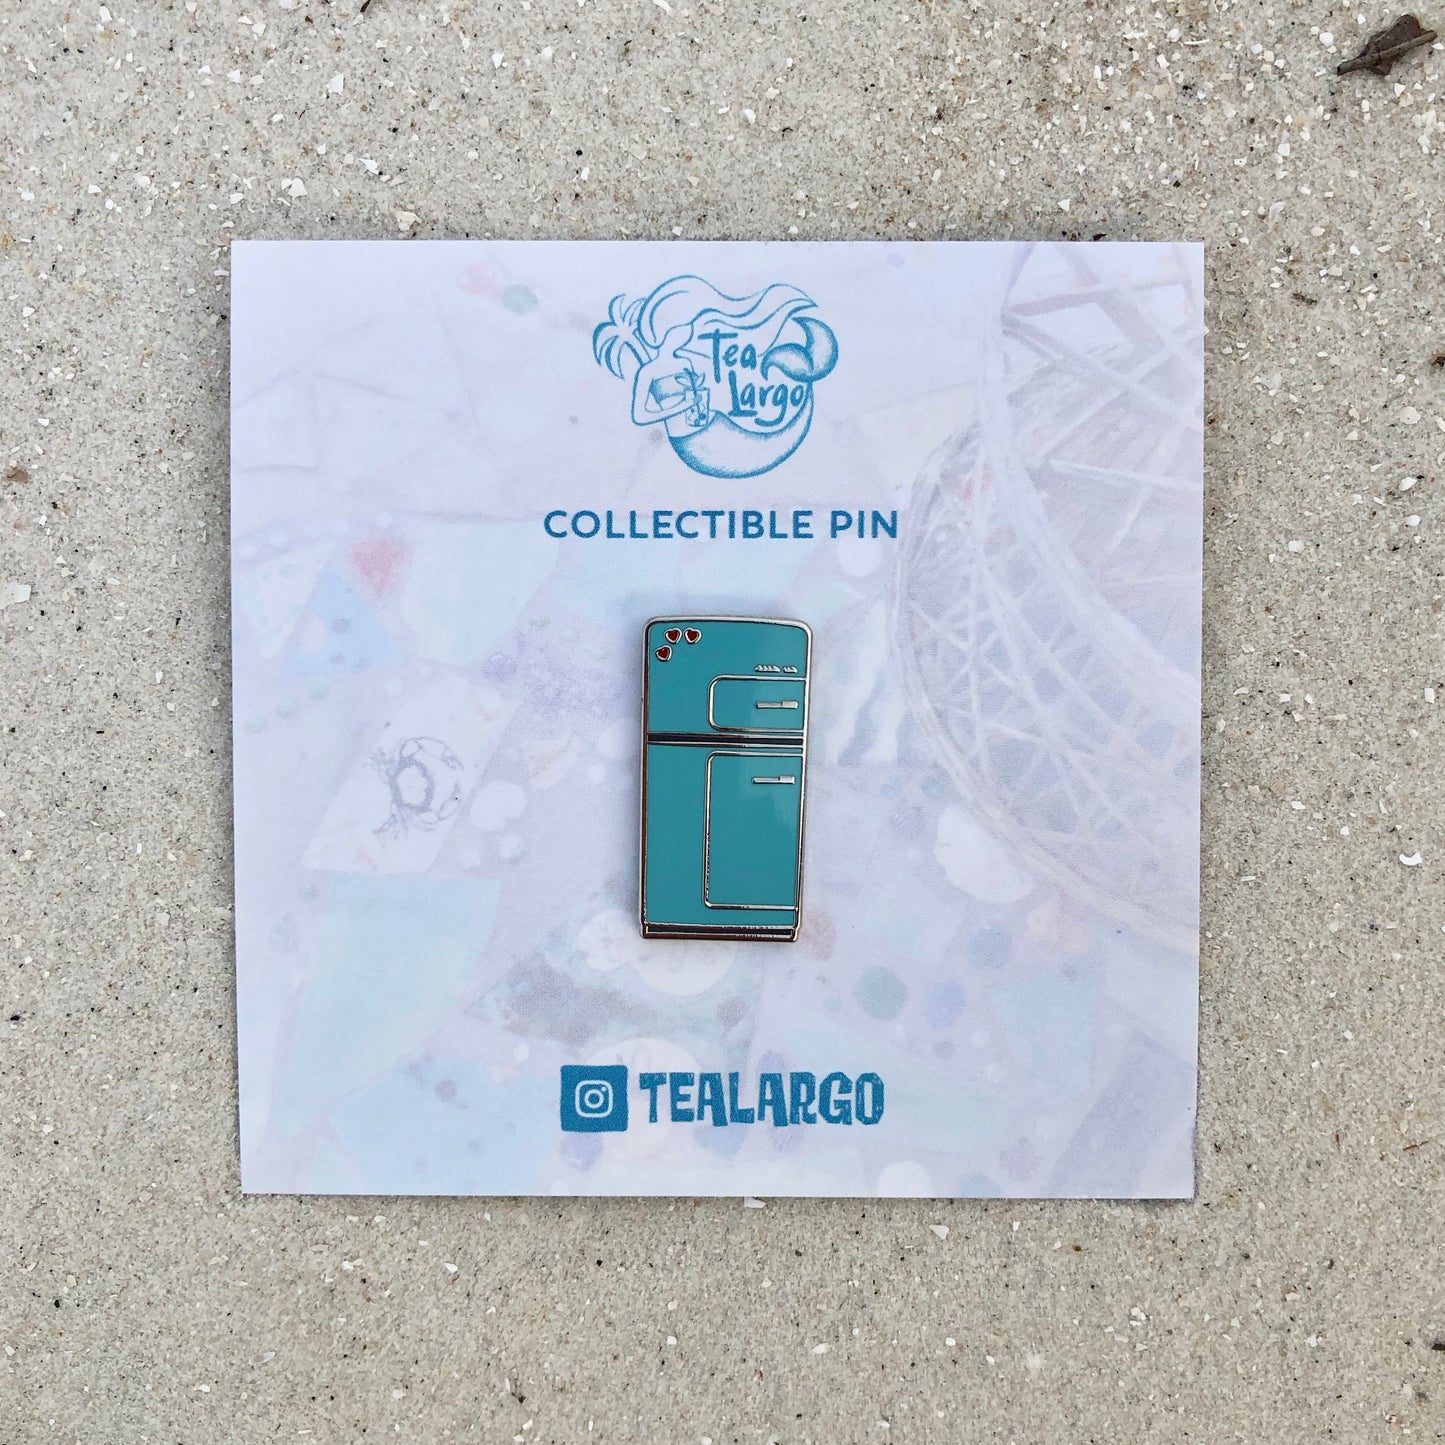 Retro Fridge Collectible Enamel Pin